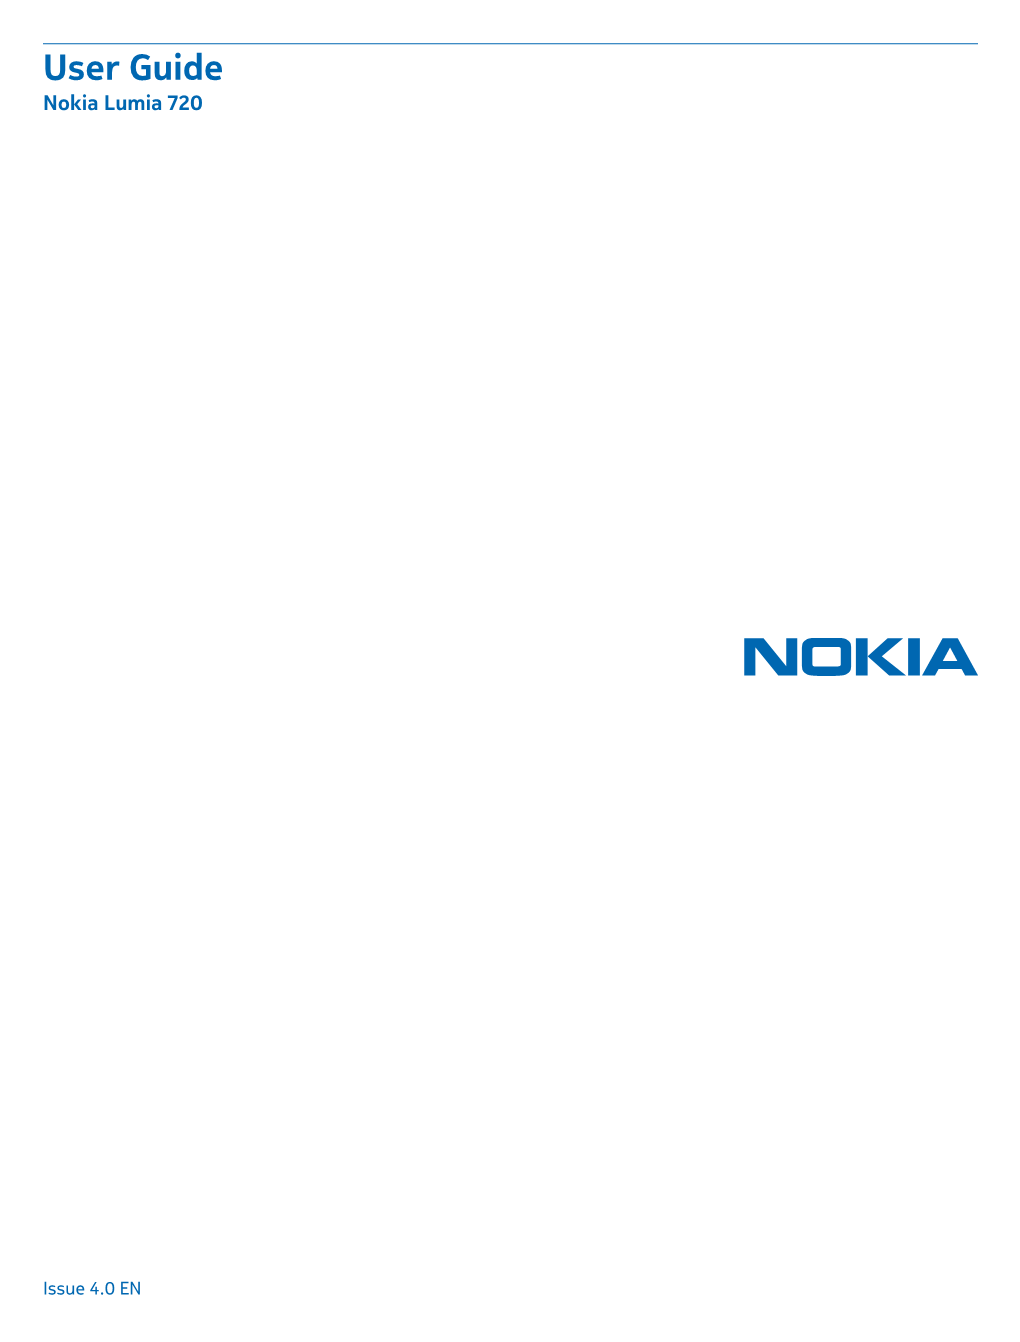 Nokia Lumia 720 User Guide